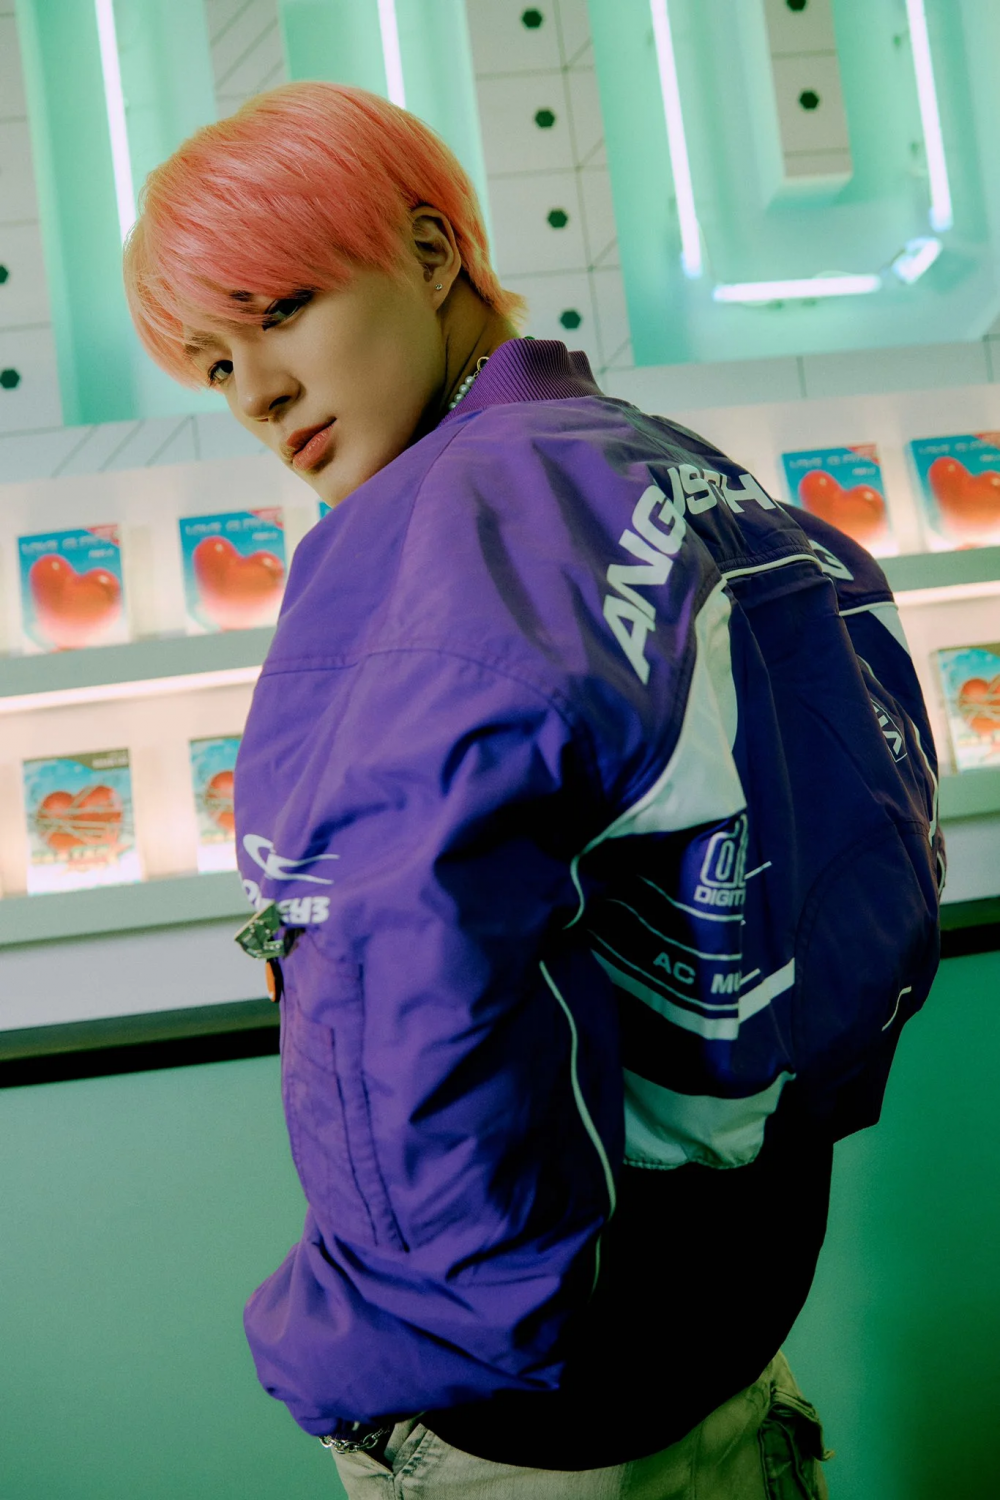 [Камбэк] NCT Dream альбом «Glitch Mode»: музыкальный клип